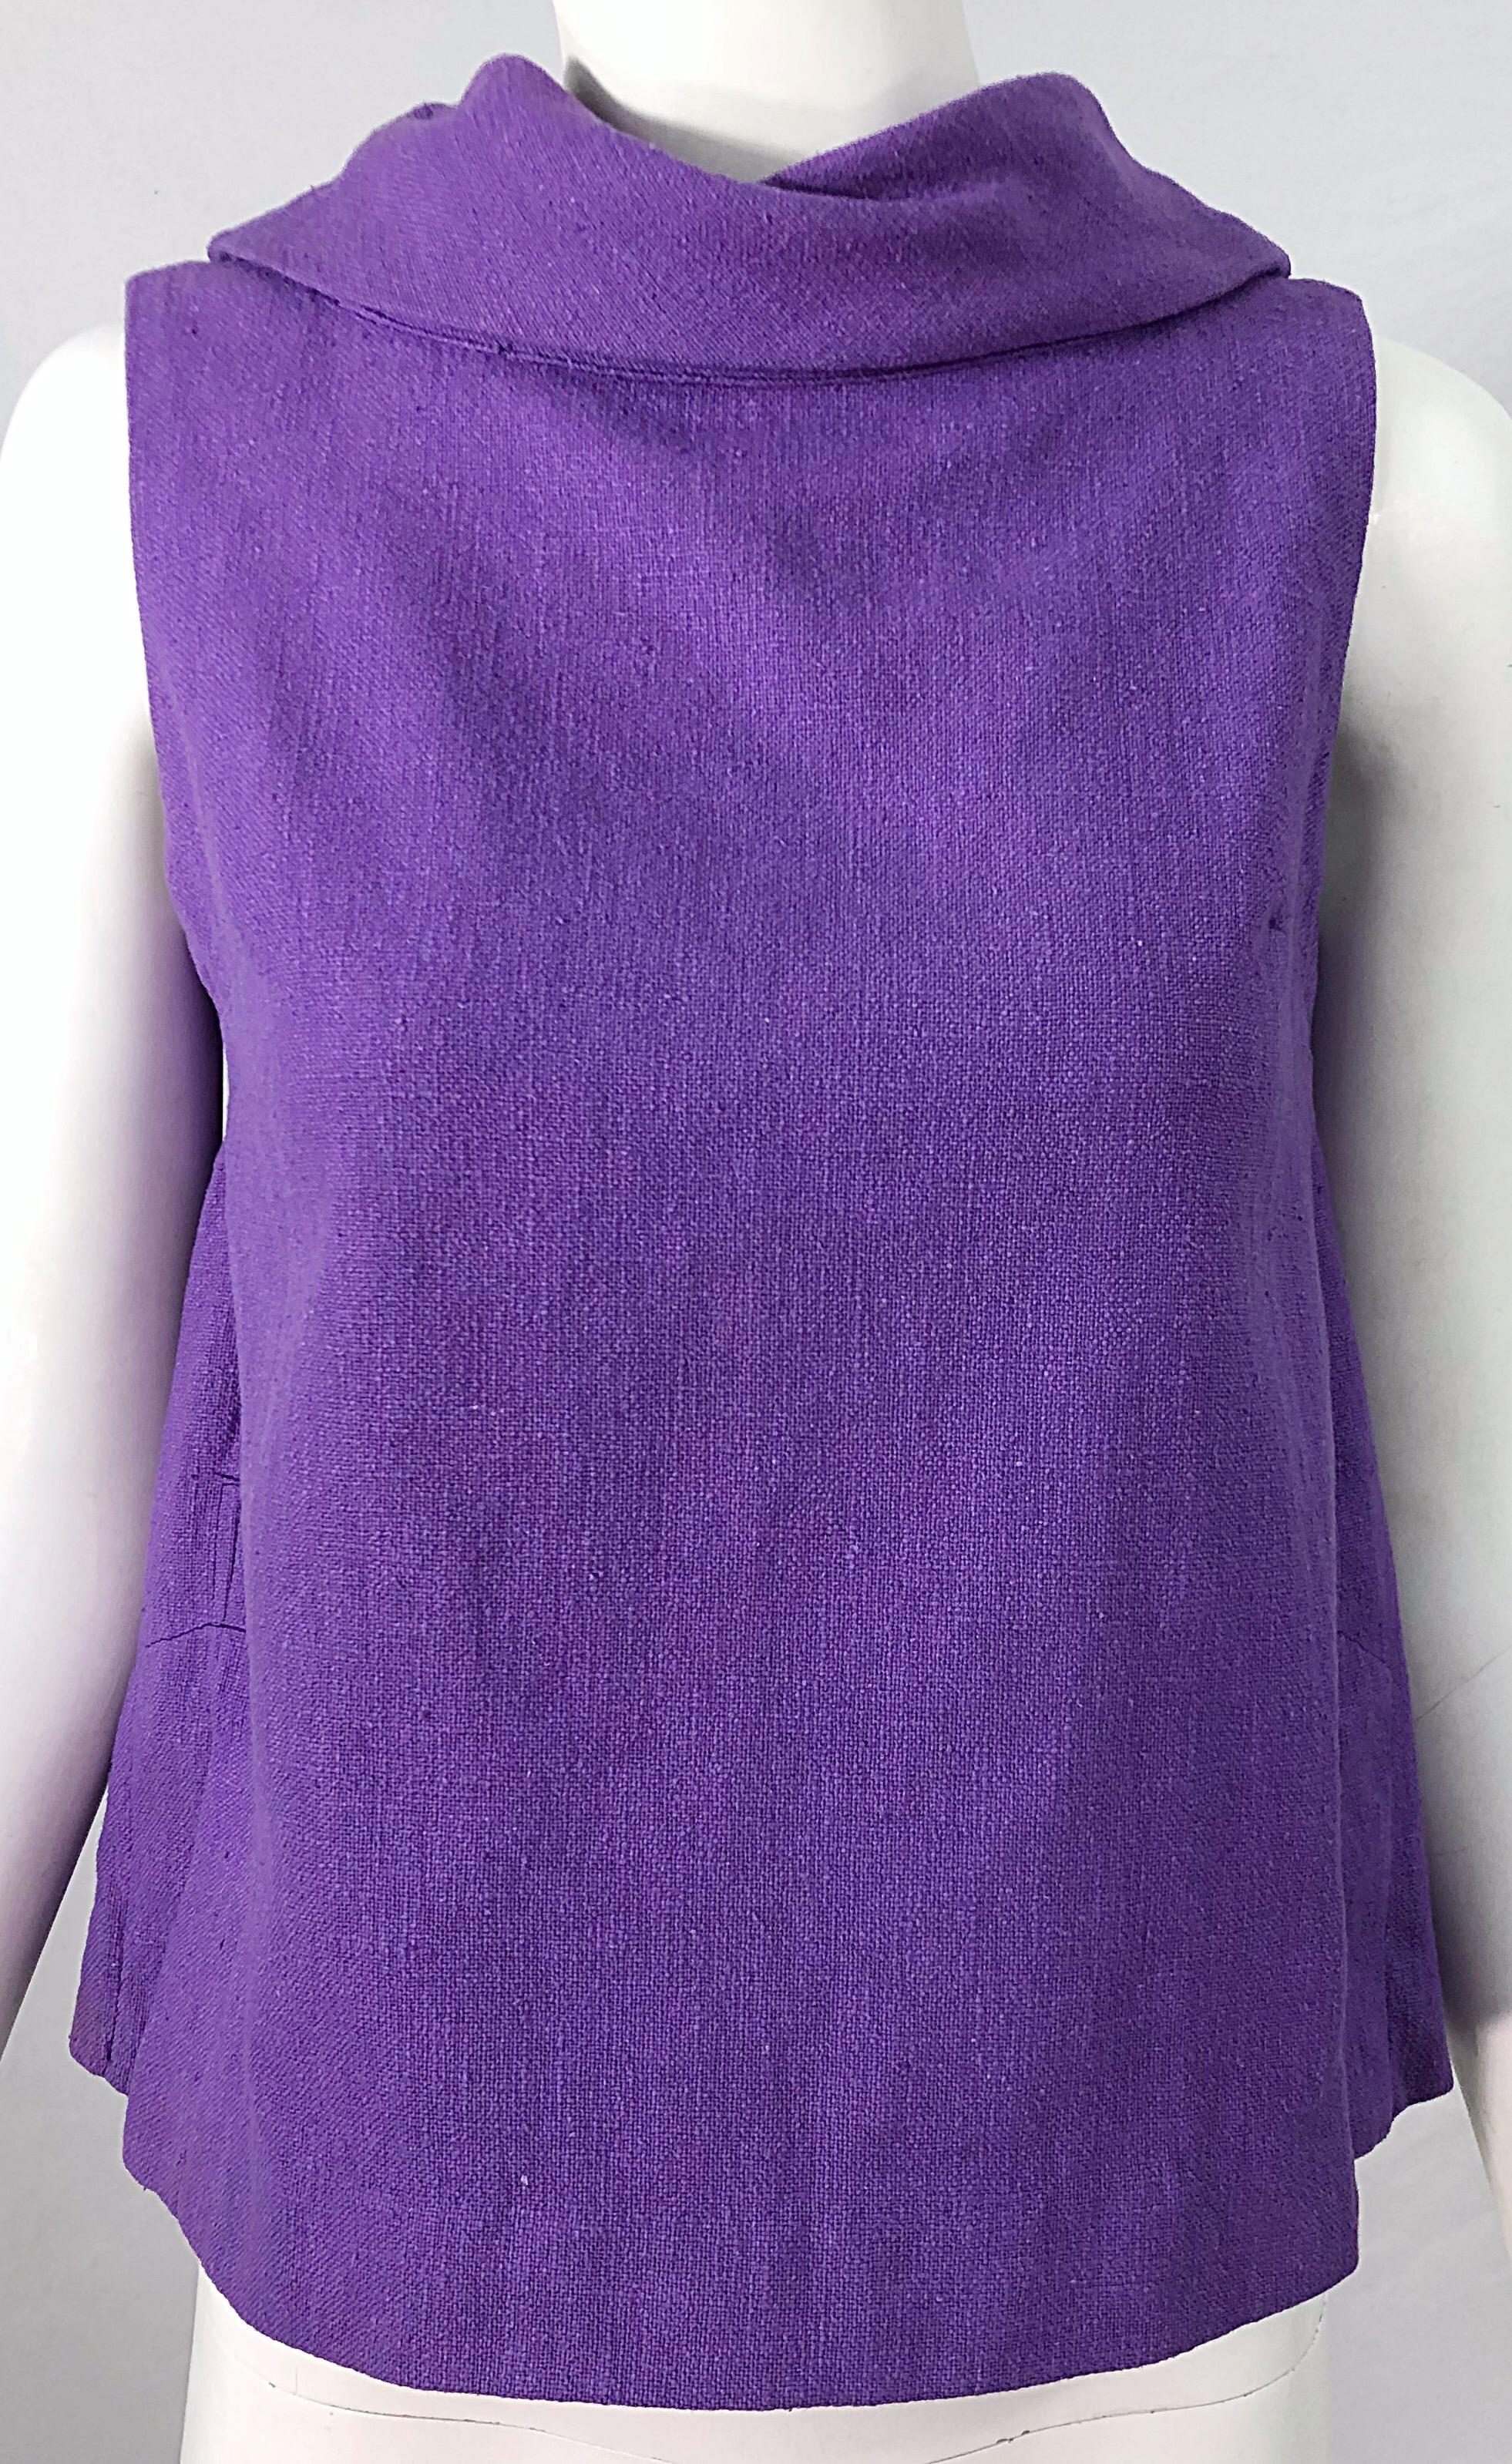 Women's Chic 1960s Purple Linen Empire Waist Vintage 60s A Line Sleeveless Top Shirt For Sale